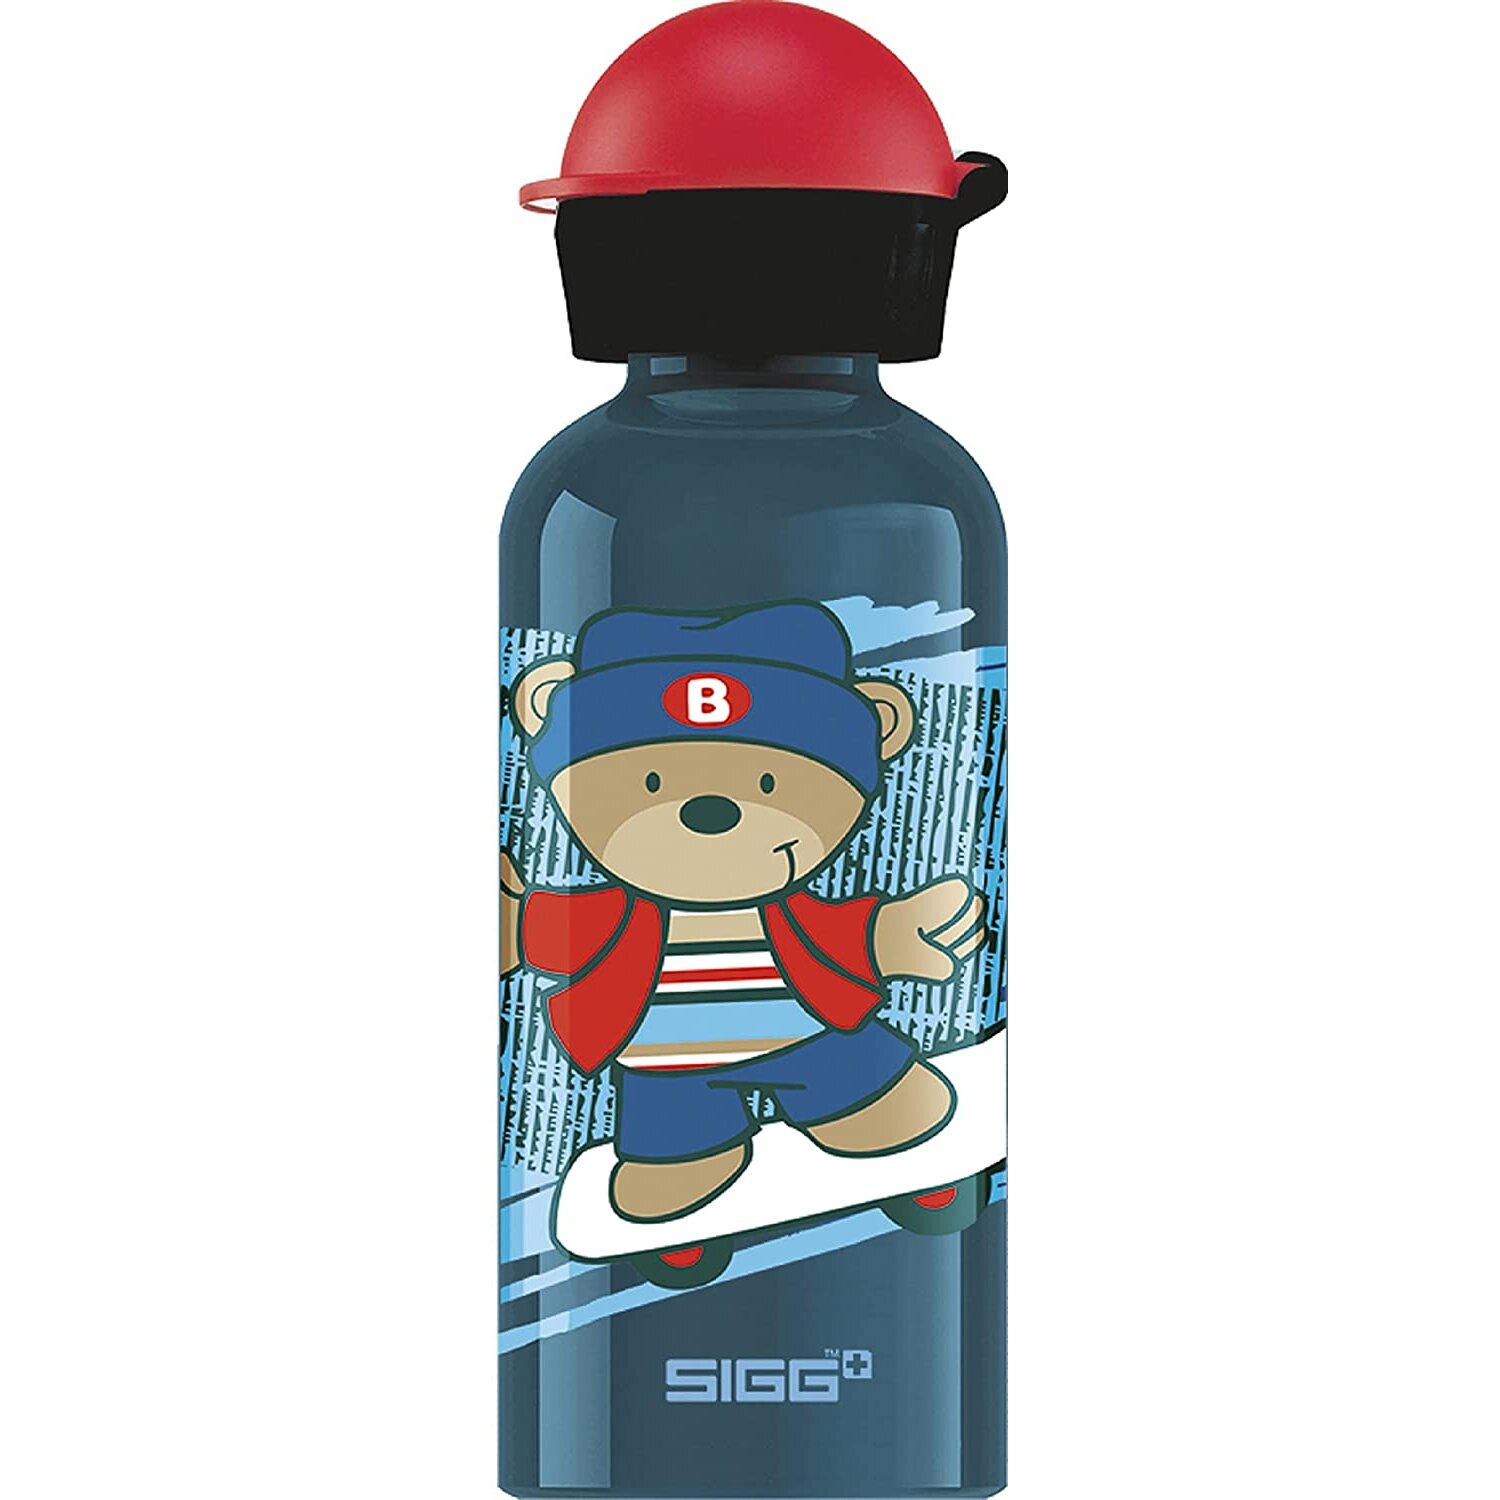 SIGG Children's Drinking Bottle (0.4 L), Pollutant-Free Children's Bottle with Leak-Proof Lid, Lightweight Kids' Water Bottle...